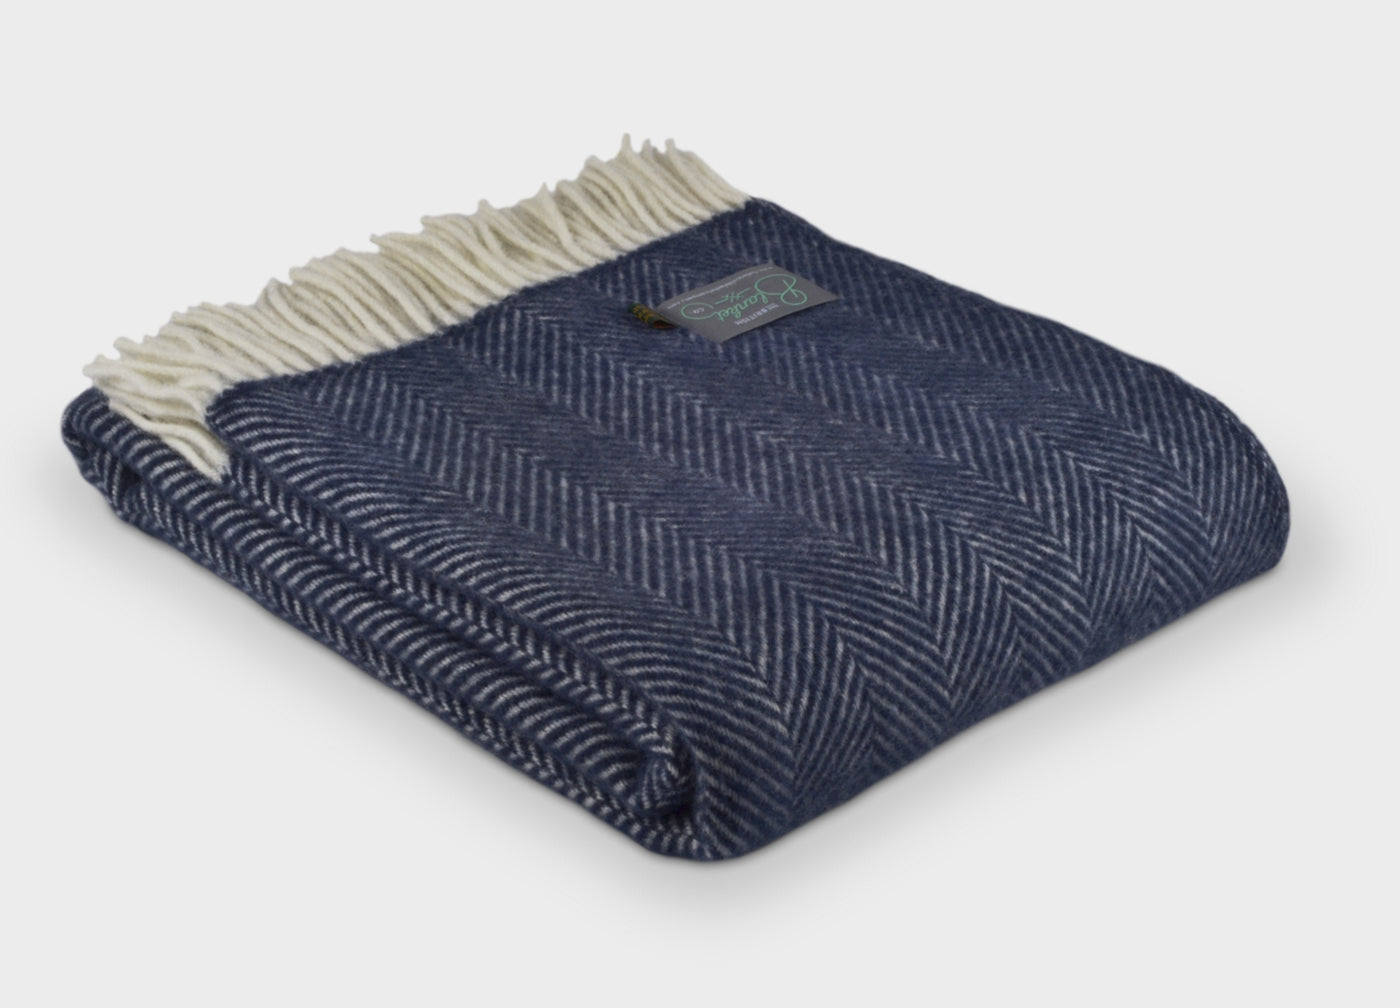 Folded large blue herringbone wool throw by The British Blanket Company